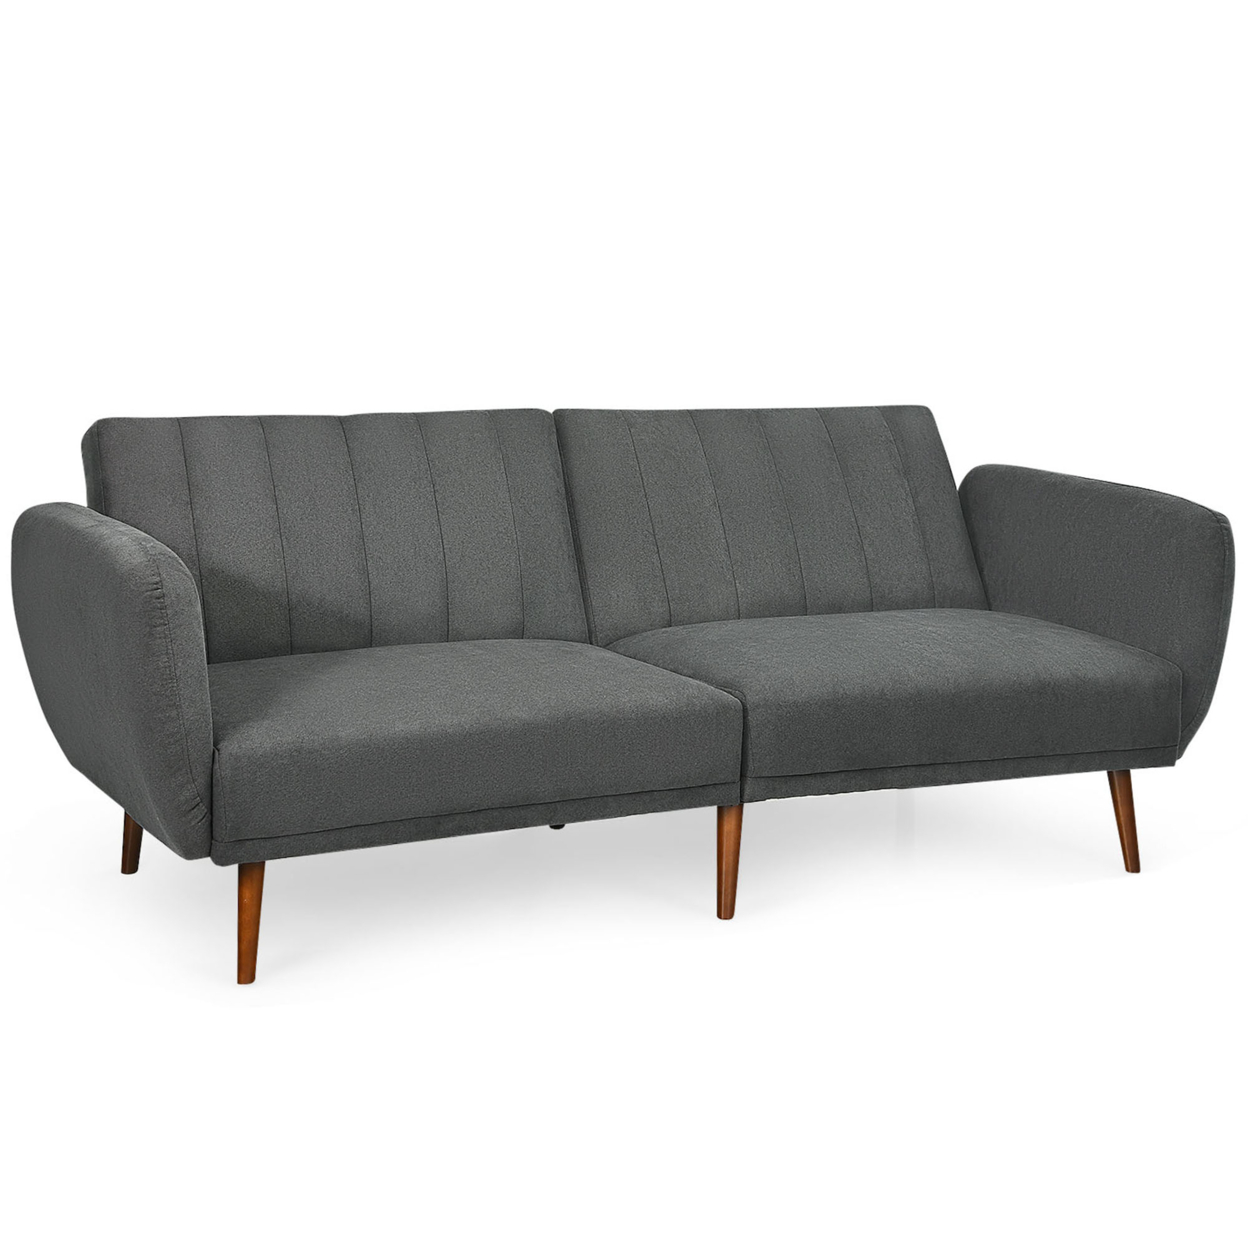 Modern Sofa Bed Convertible Futon Sofa W/ 3-Level Adjustable Angle Function - Grey